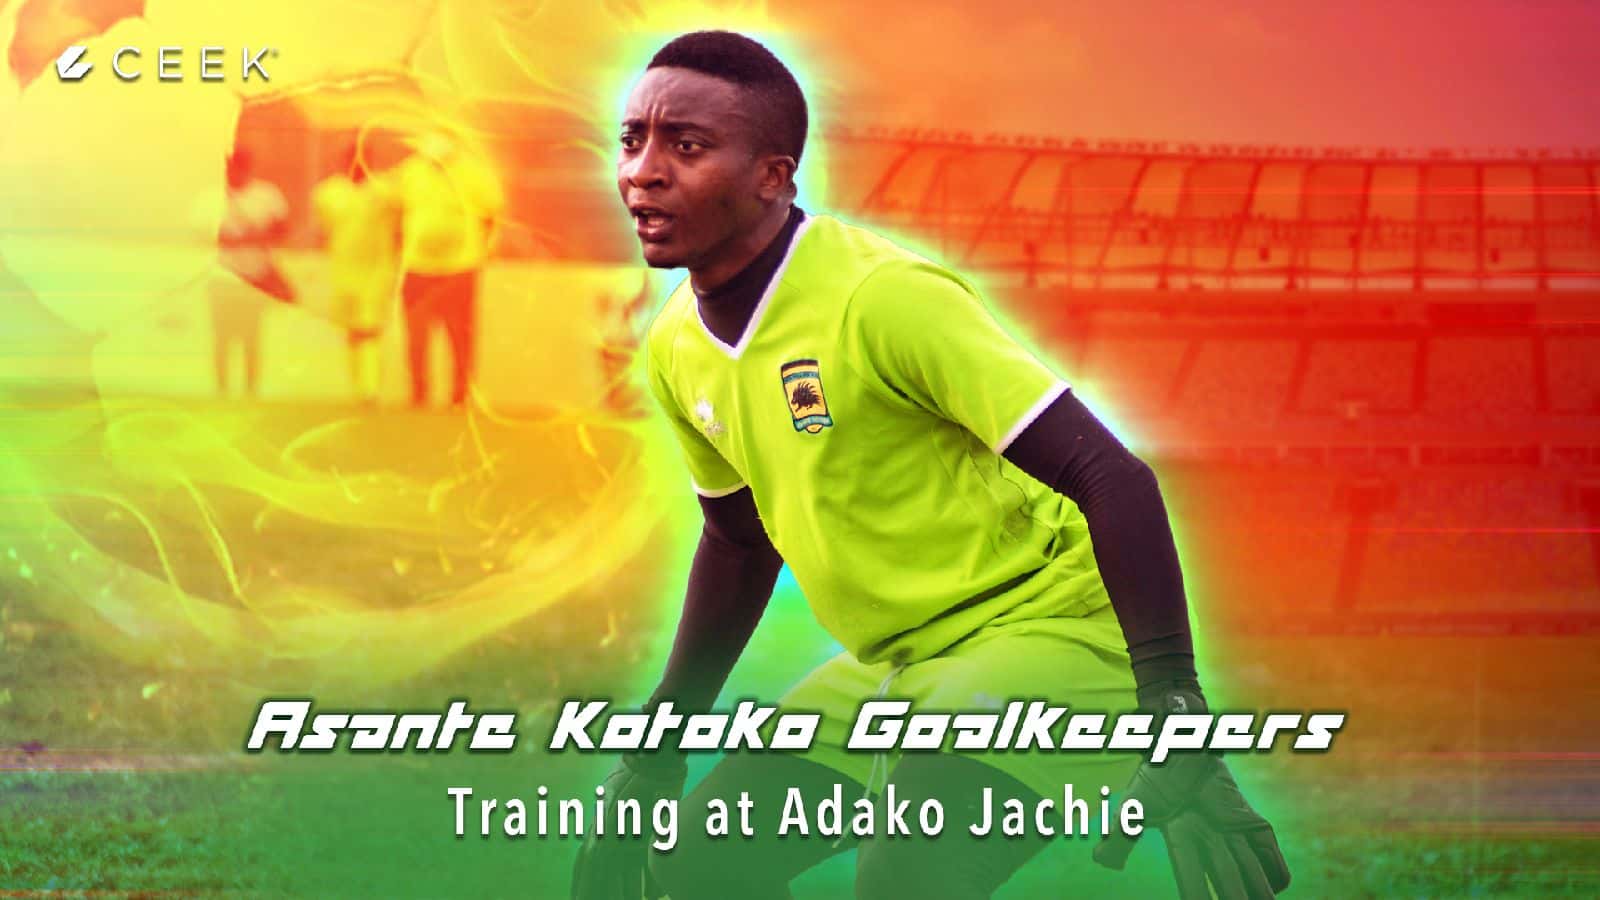 Goalkeepers training at Adako Jachie